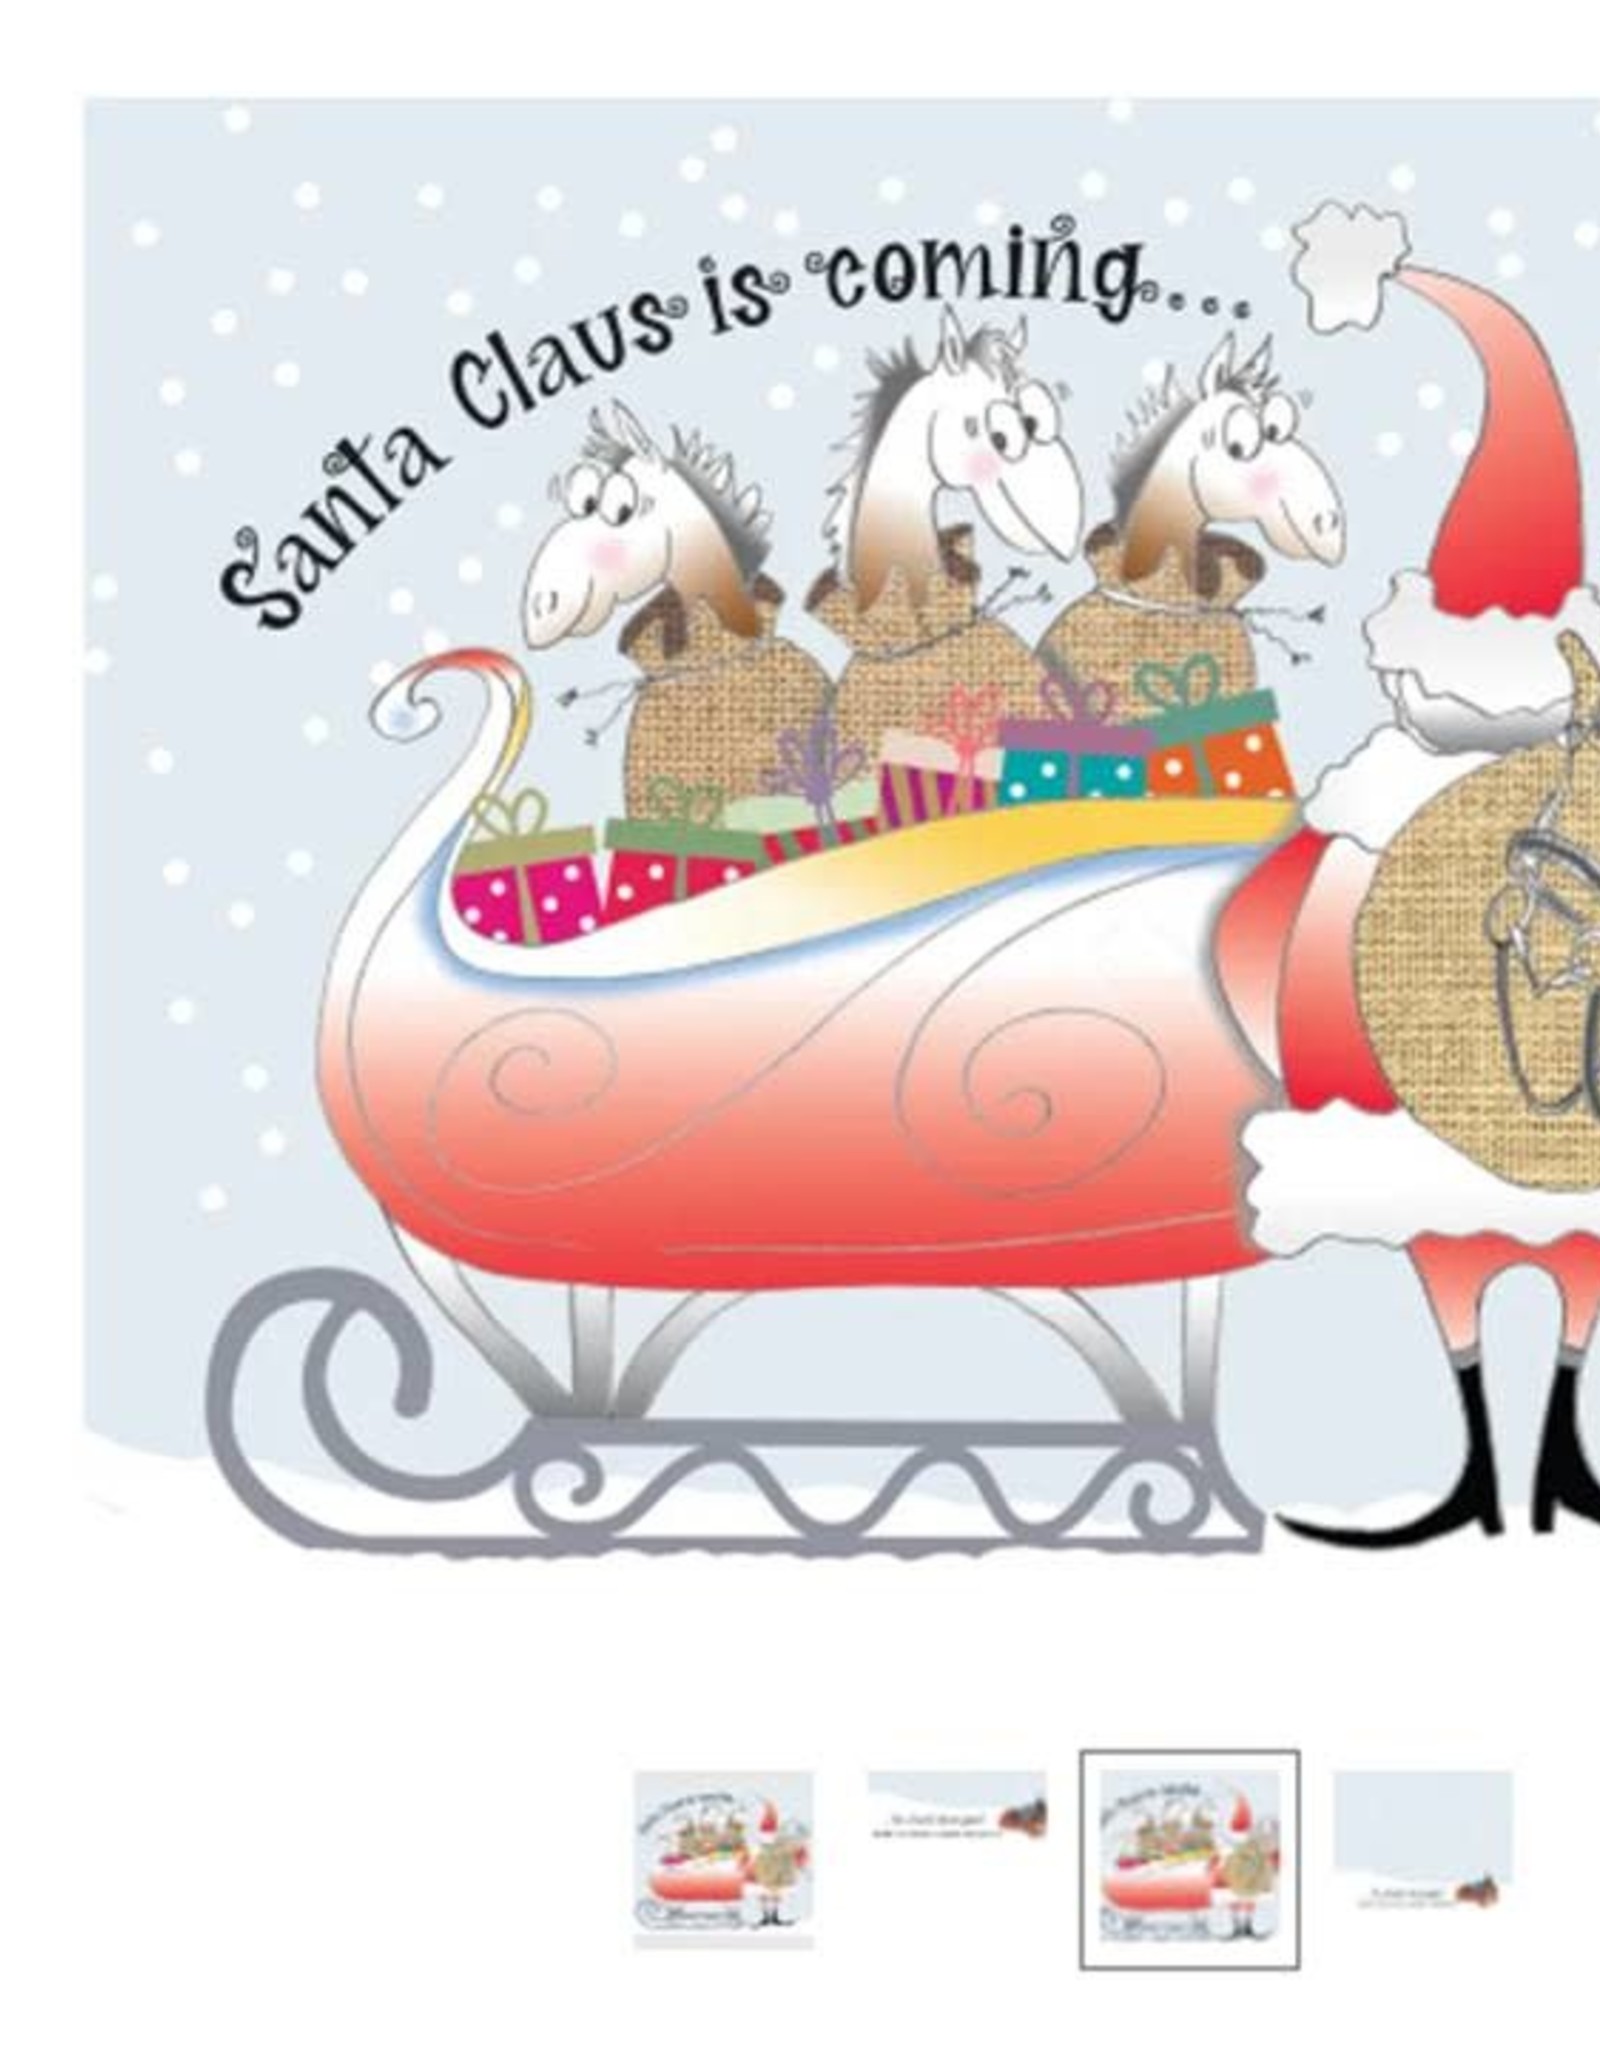 Horse Hollow Press Christmas Card: Santa Claus is coming...